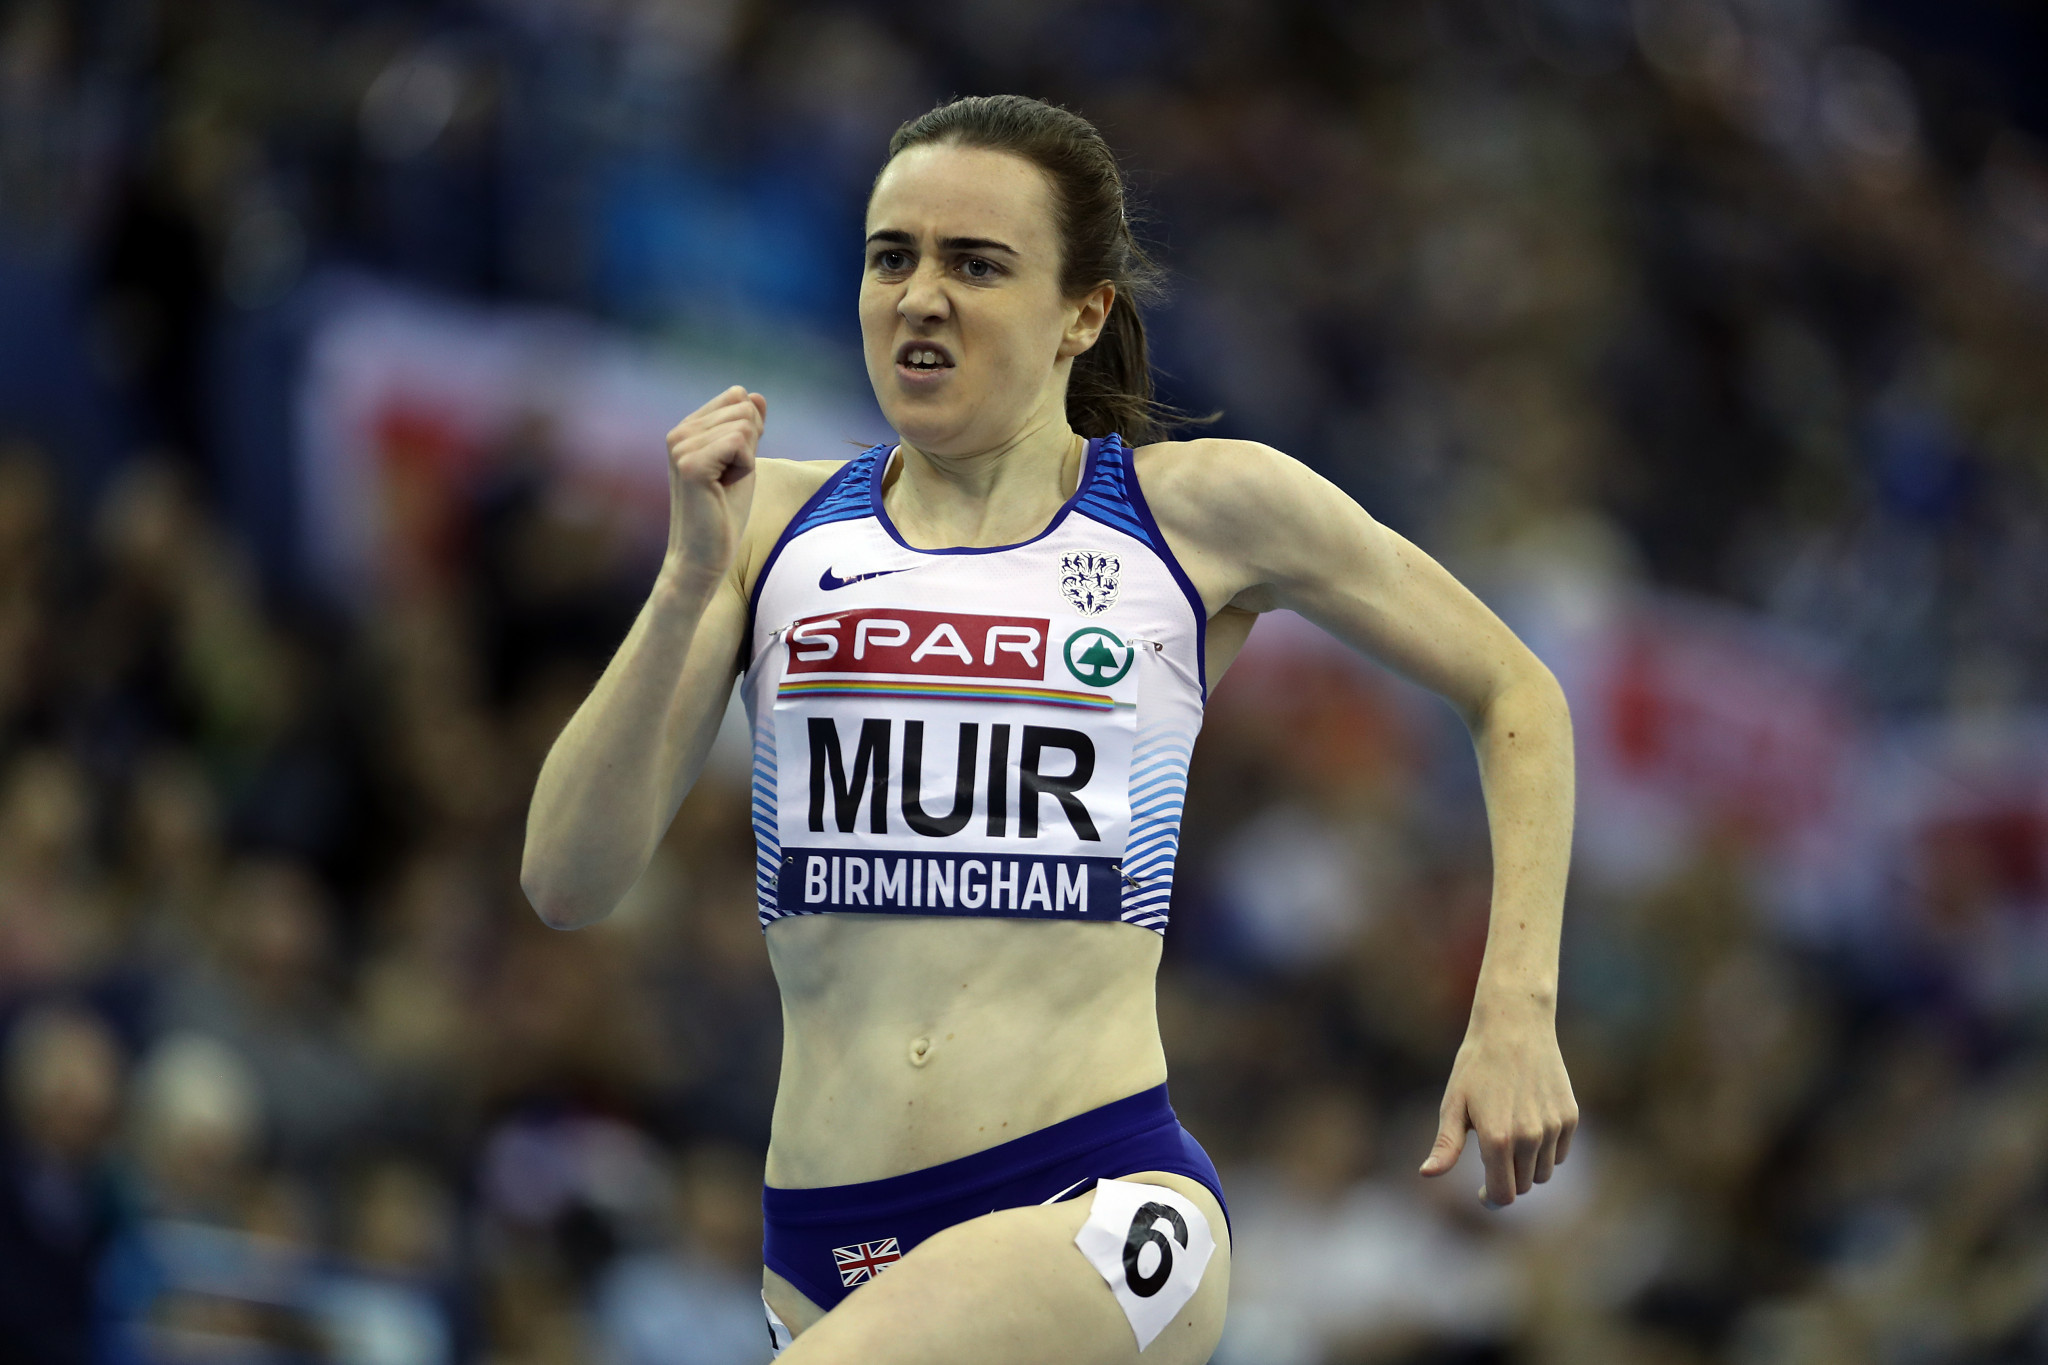 Muir heads British hopes at IAAF World Indoor Tour in Birmingham